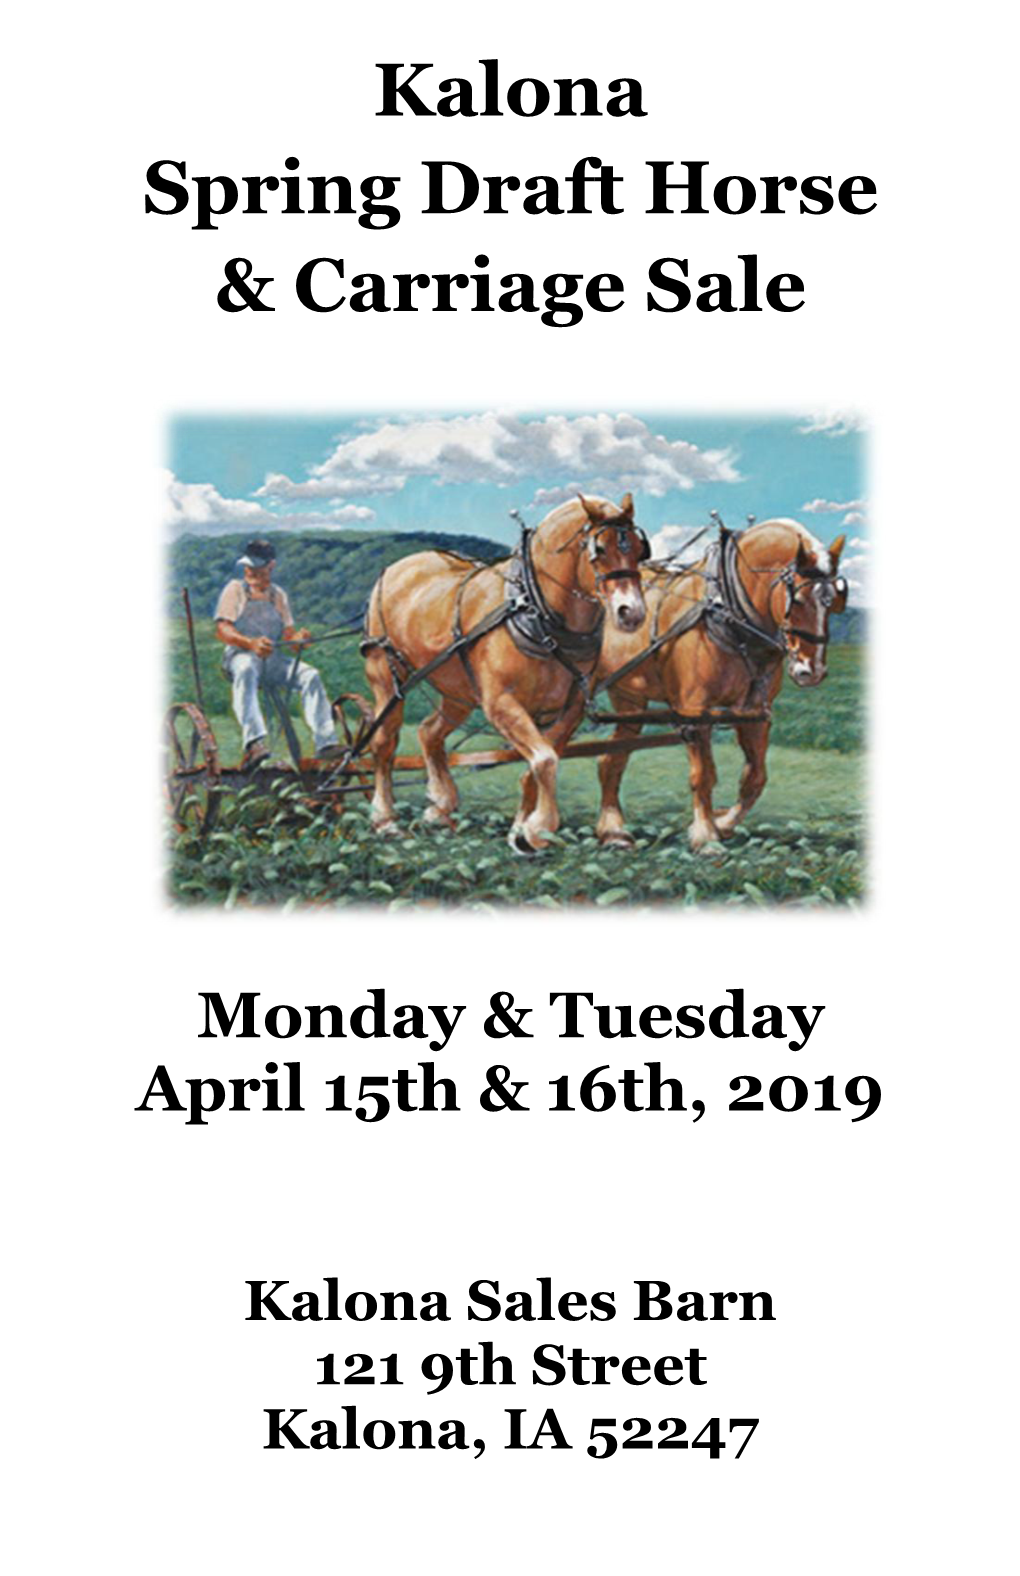 Kalona Spring Draft Horse & Carriage Sale